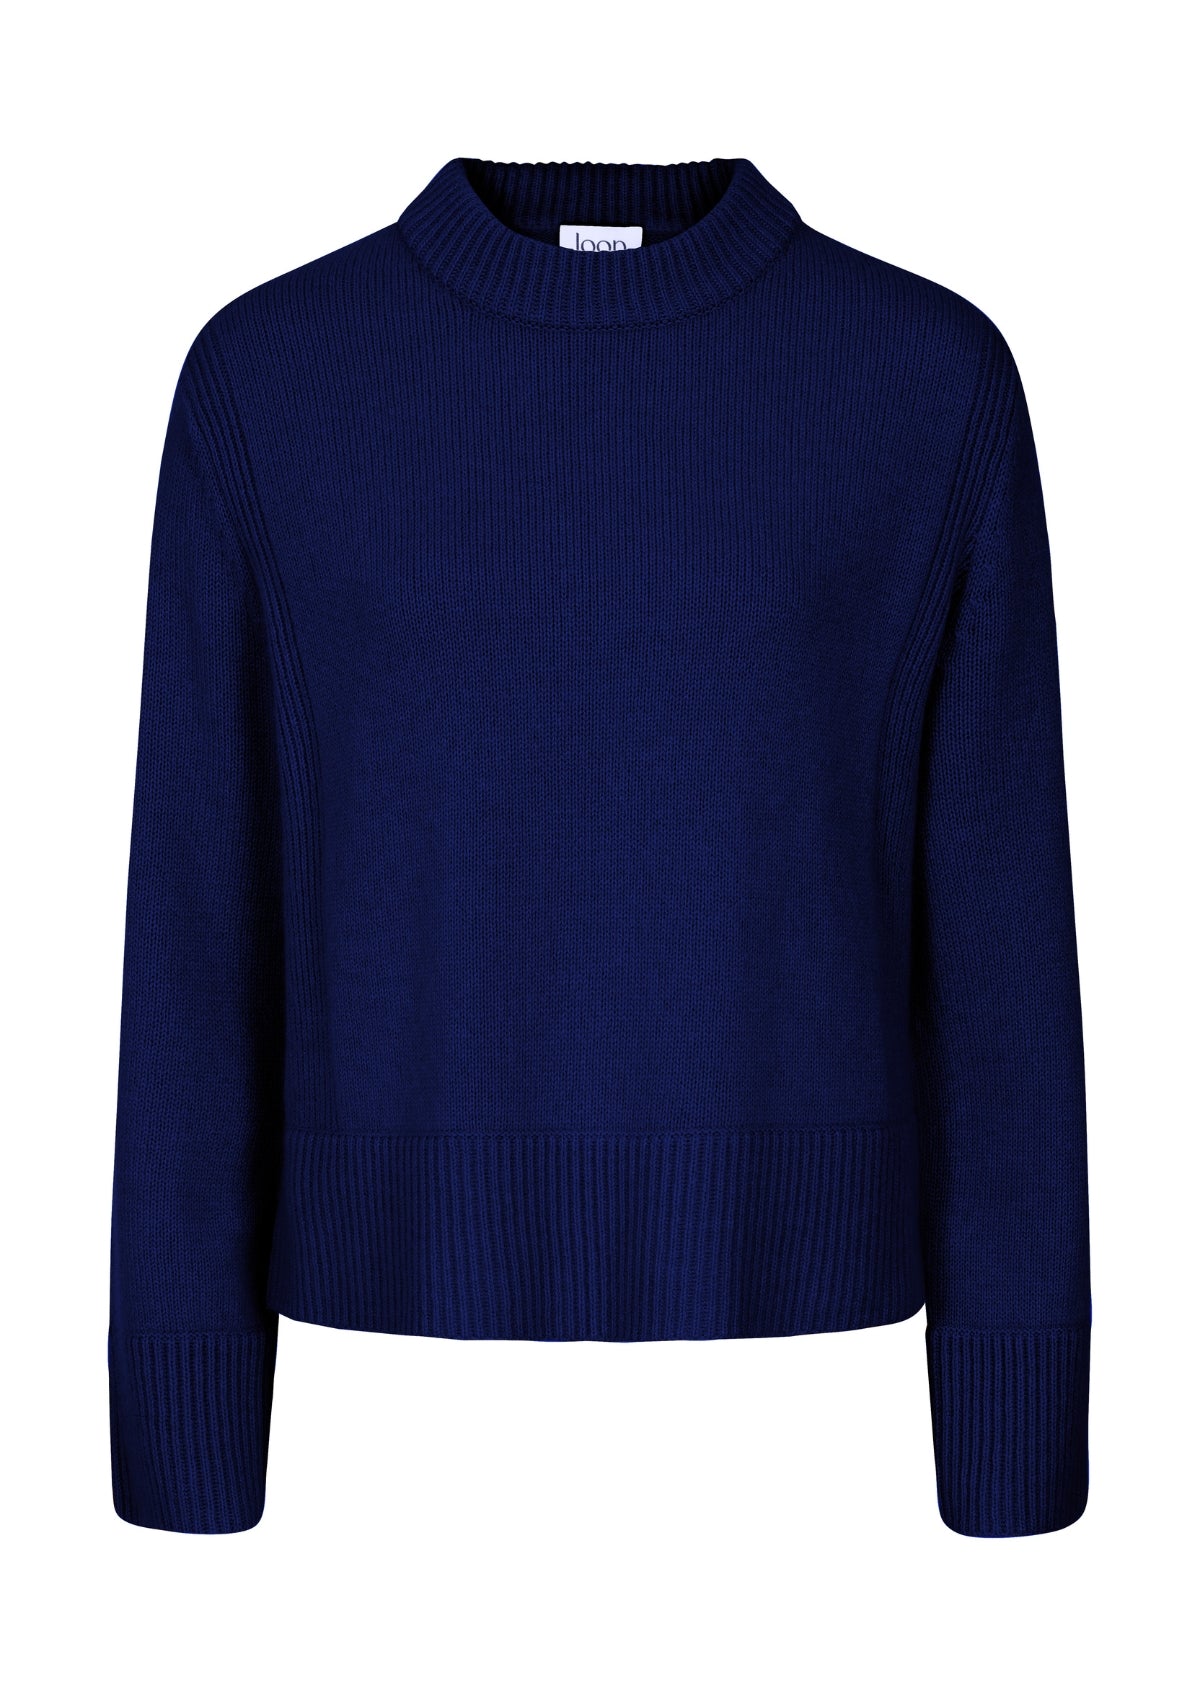 Cropped Cashmere Sweatshirt in Midnight Blue